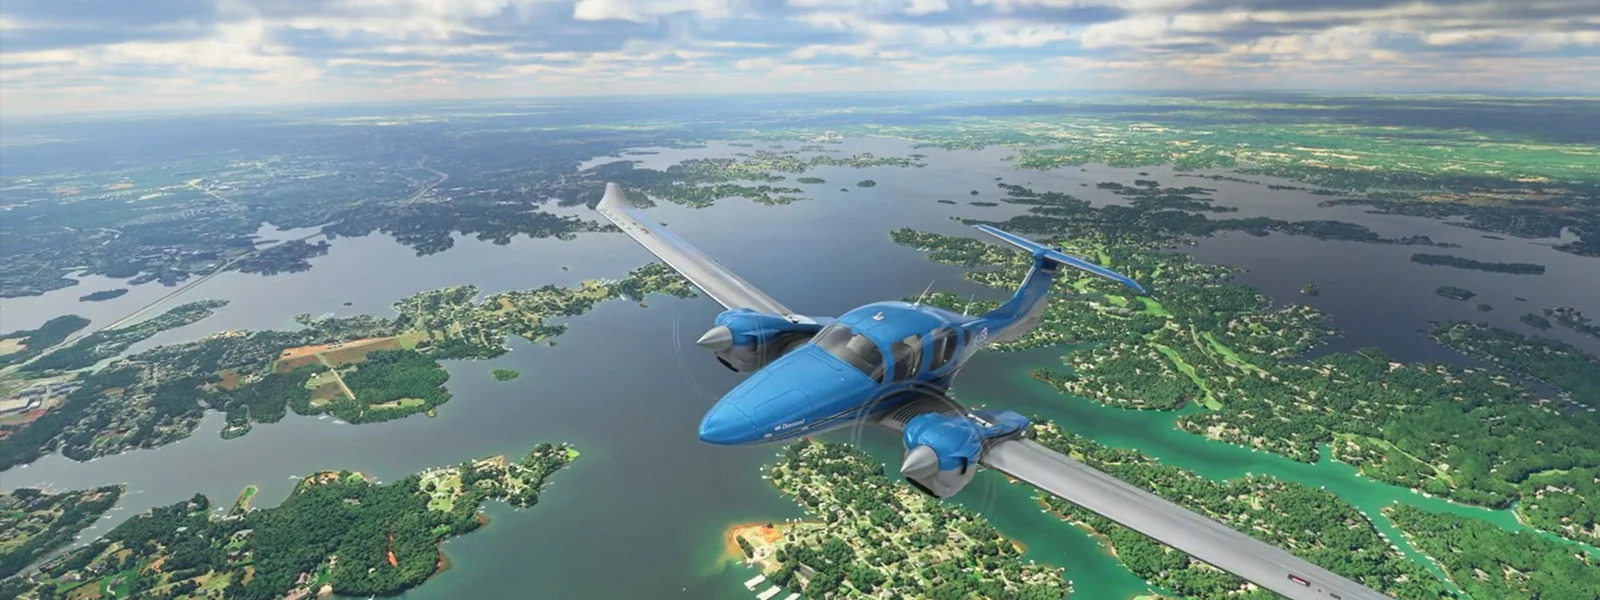 Xbox Game Pass PC videó miniatűrje a Flight Simulatorról